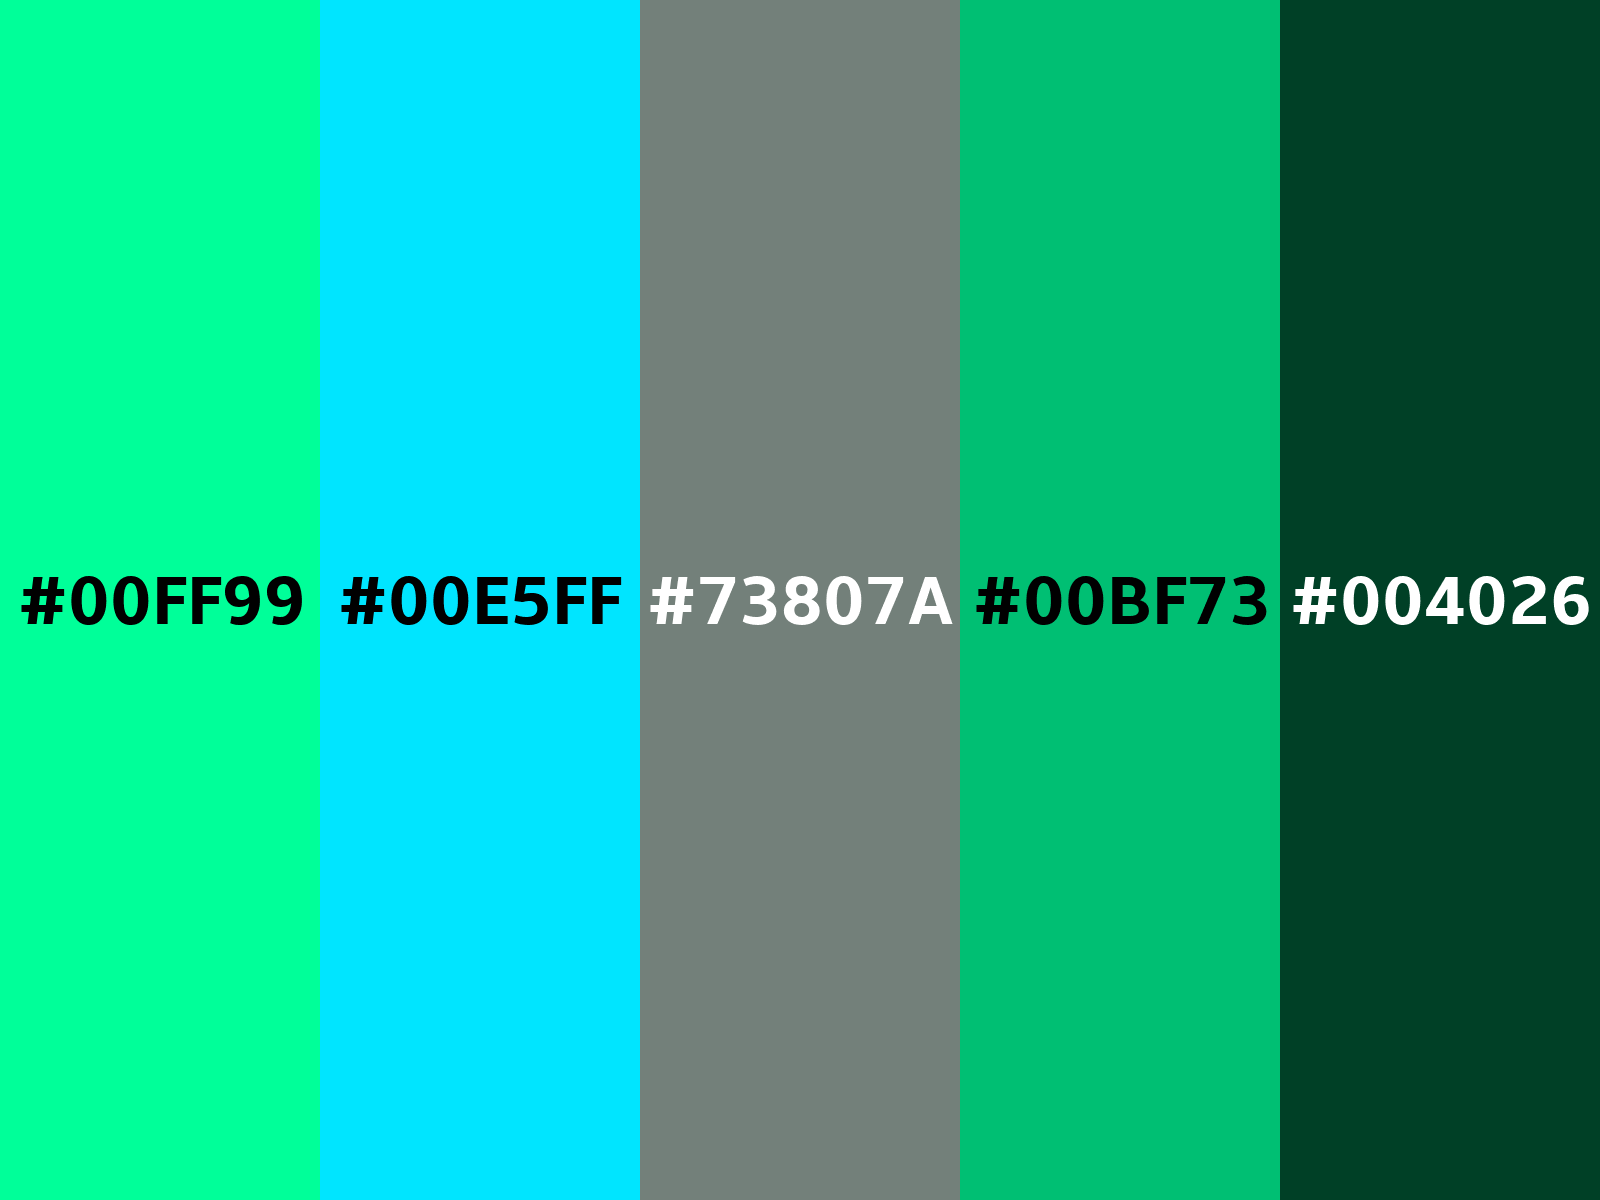 00FF99 Hex Color, RGB: 0, 255, 153